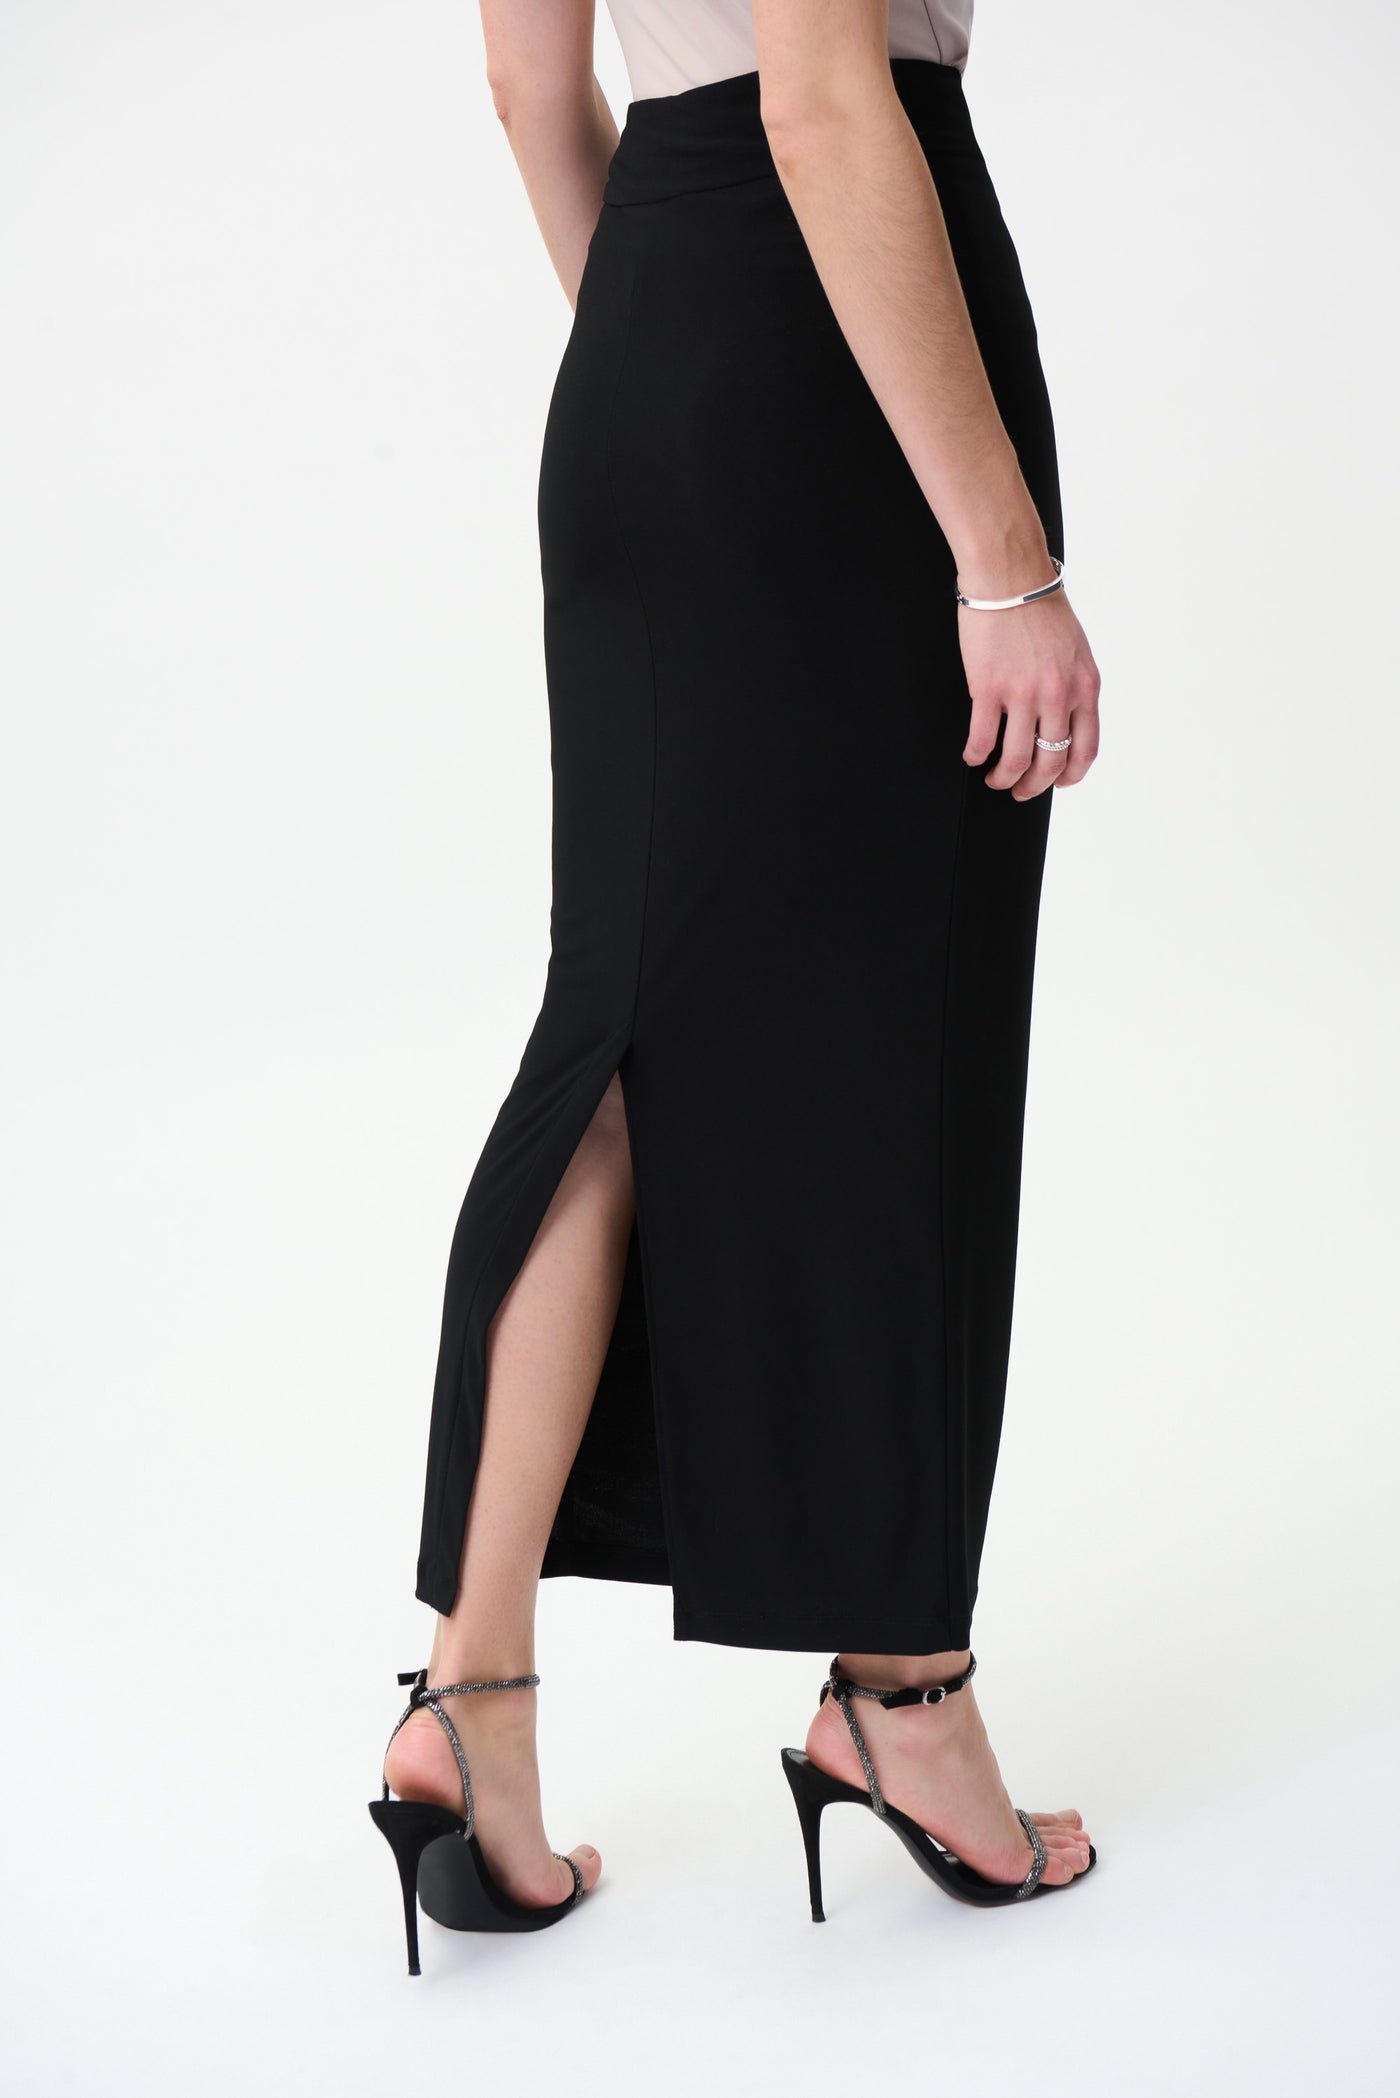 Joseph Ribkoff Skirt Style 224309